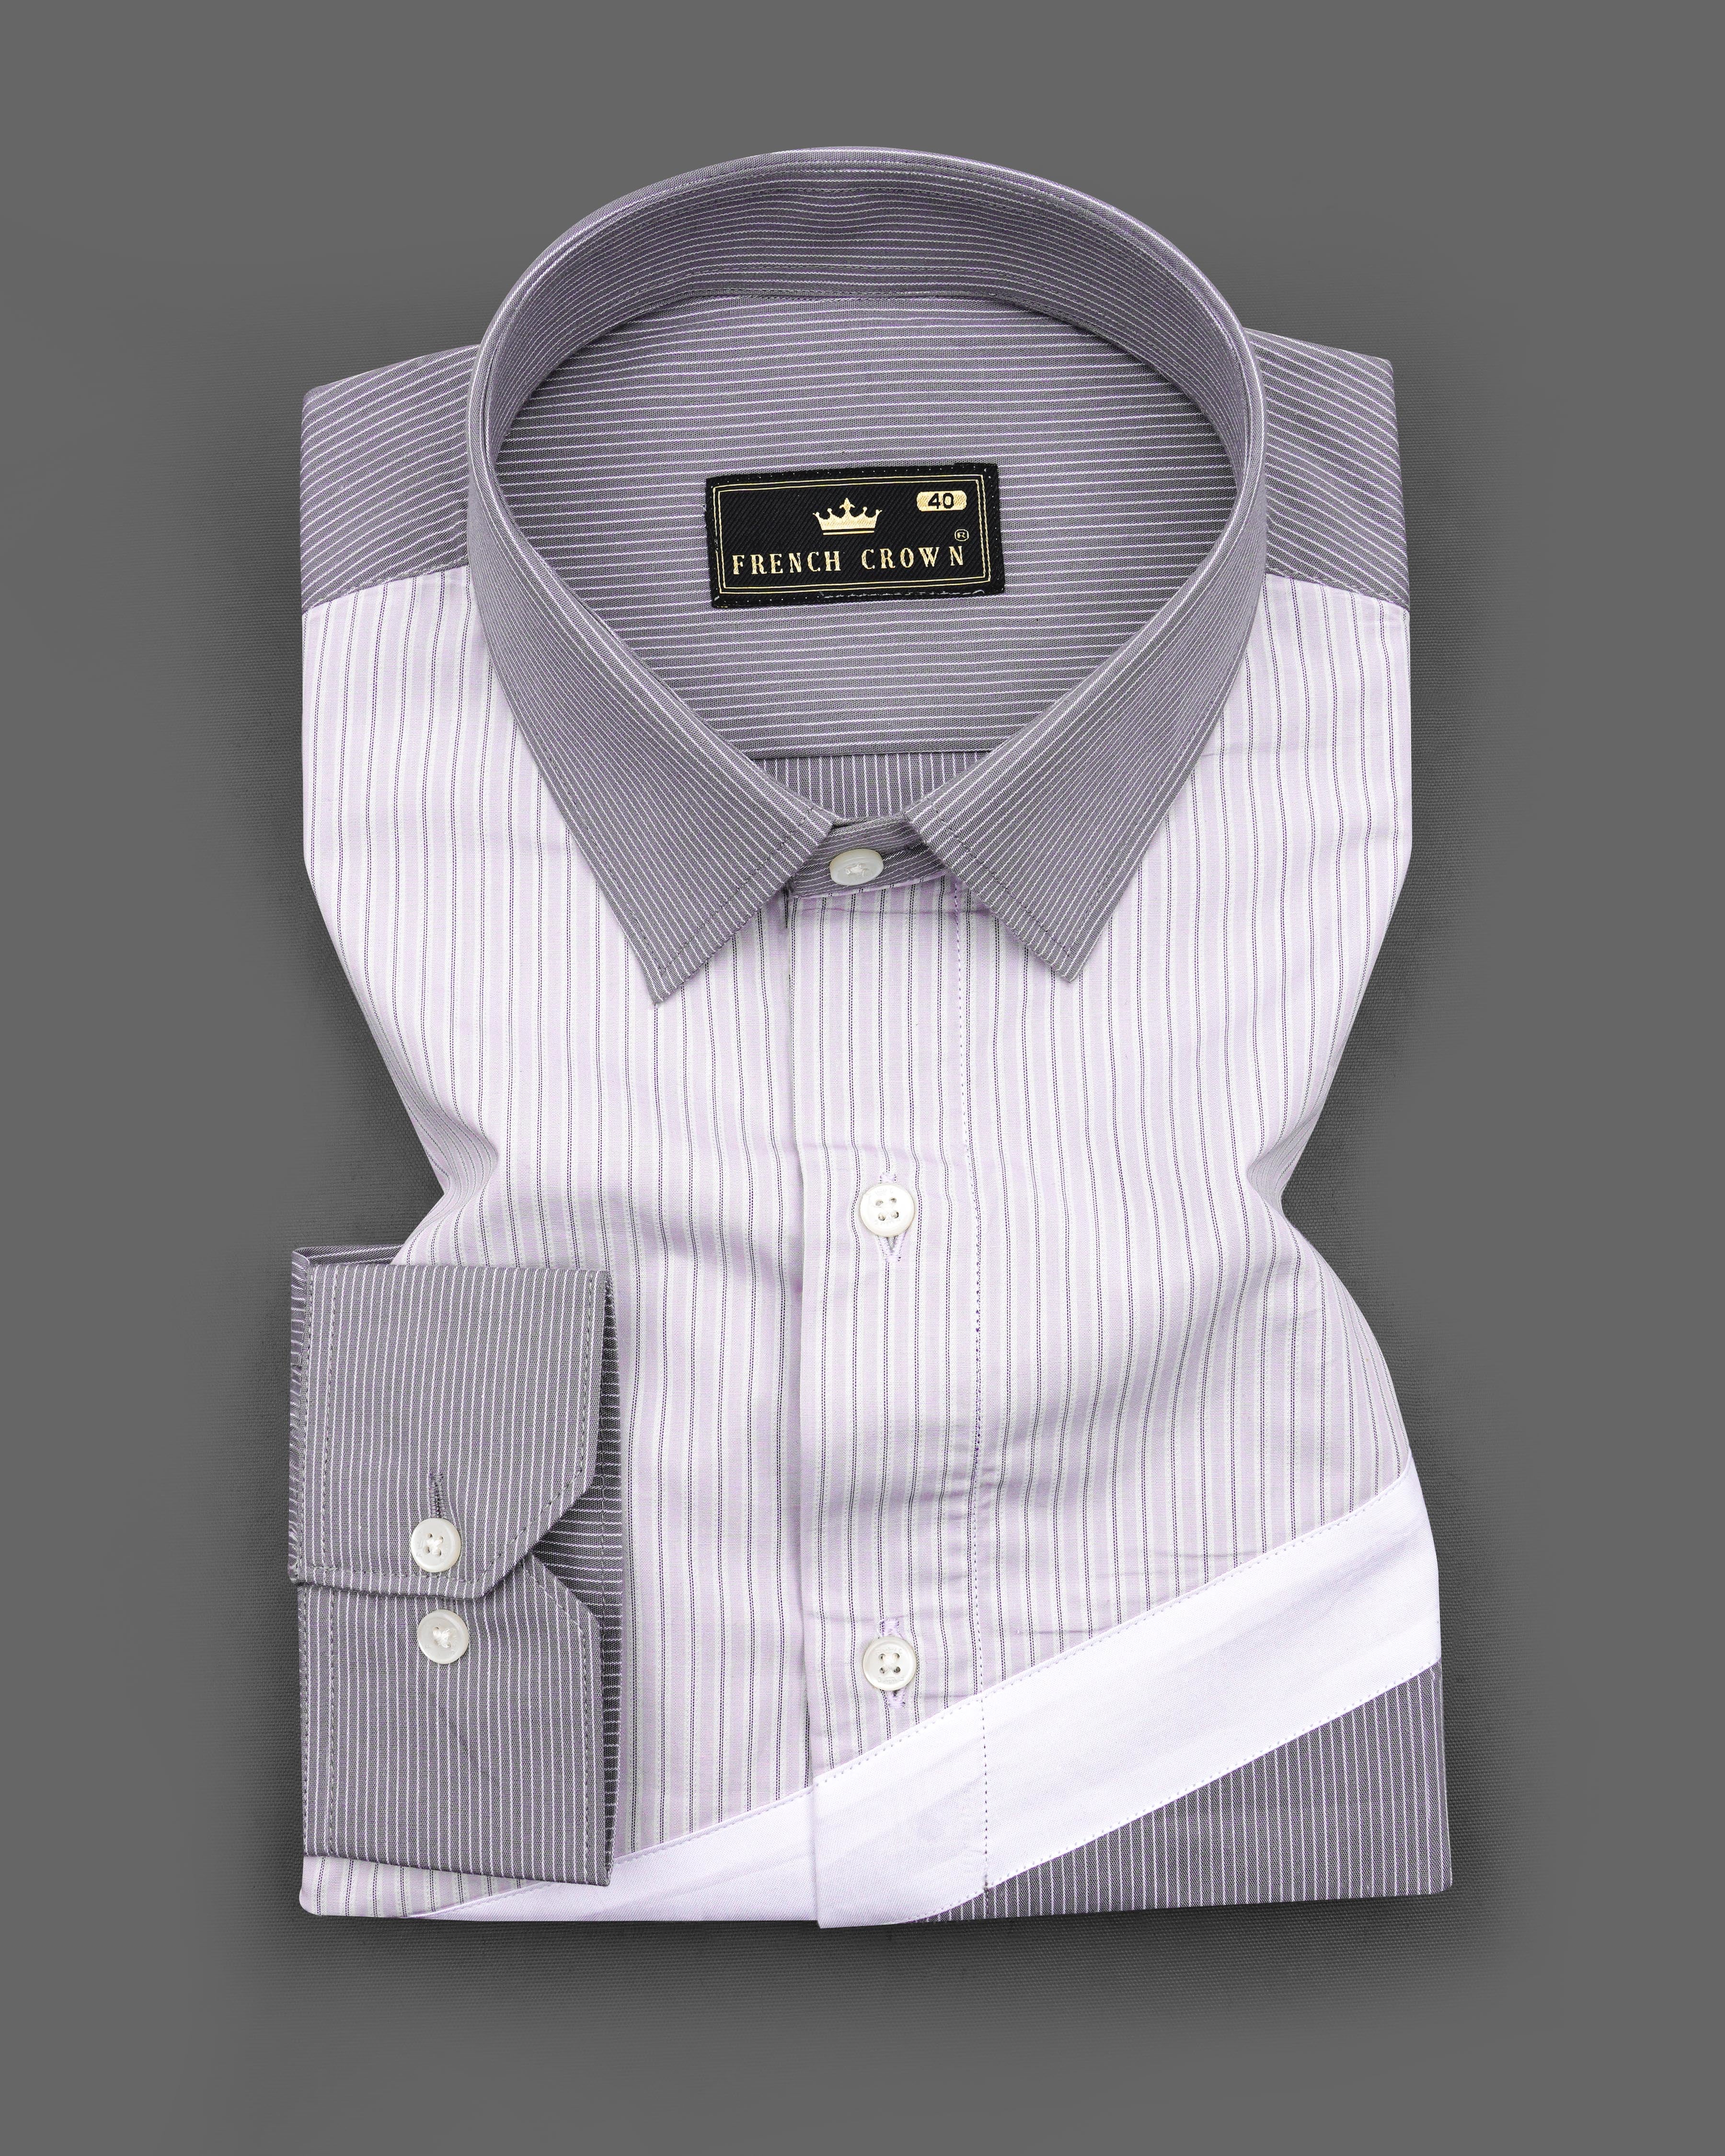 Martini Grey and White Pinstriped Premium Cotton Designer Shirt 8483-P250-38,8483-P250-H-38,8483-P250-389,8483-P250-389,8483-P250-40,8483-P250-H-40,8483-P250-402,8483-P250-402,8483-P250-404,8483-P250-404,8483-P250-406,8483-P250-406,8483-P250-408,8483-P250-408,8483-P250-50,8483-P250-H-50,8483-P250-502,8483-P250-502